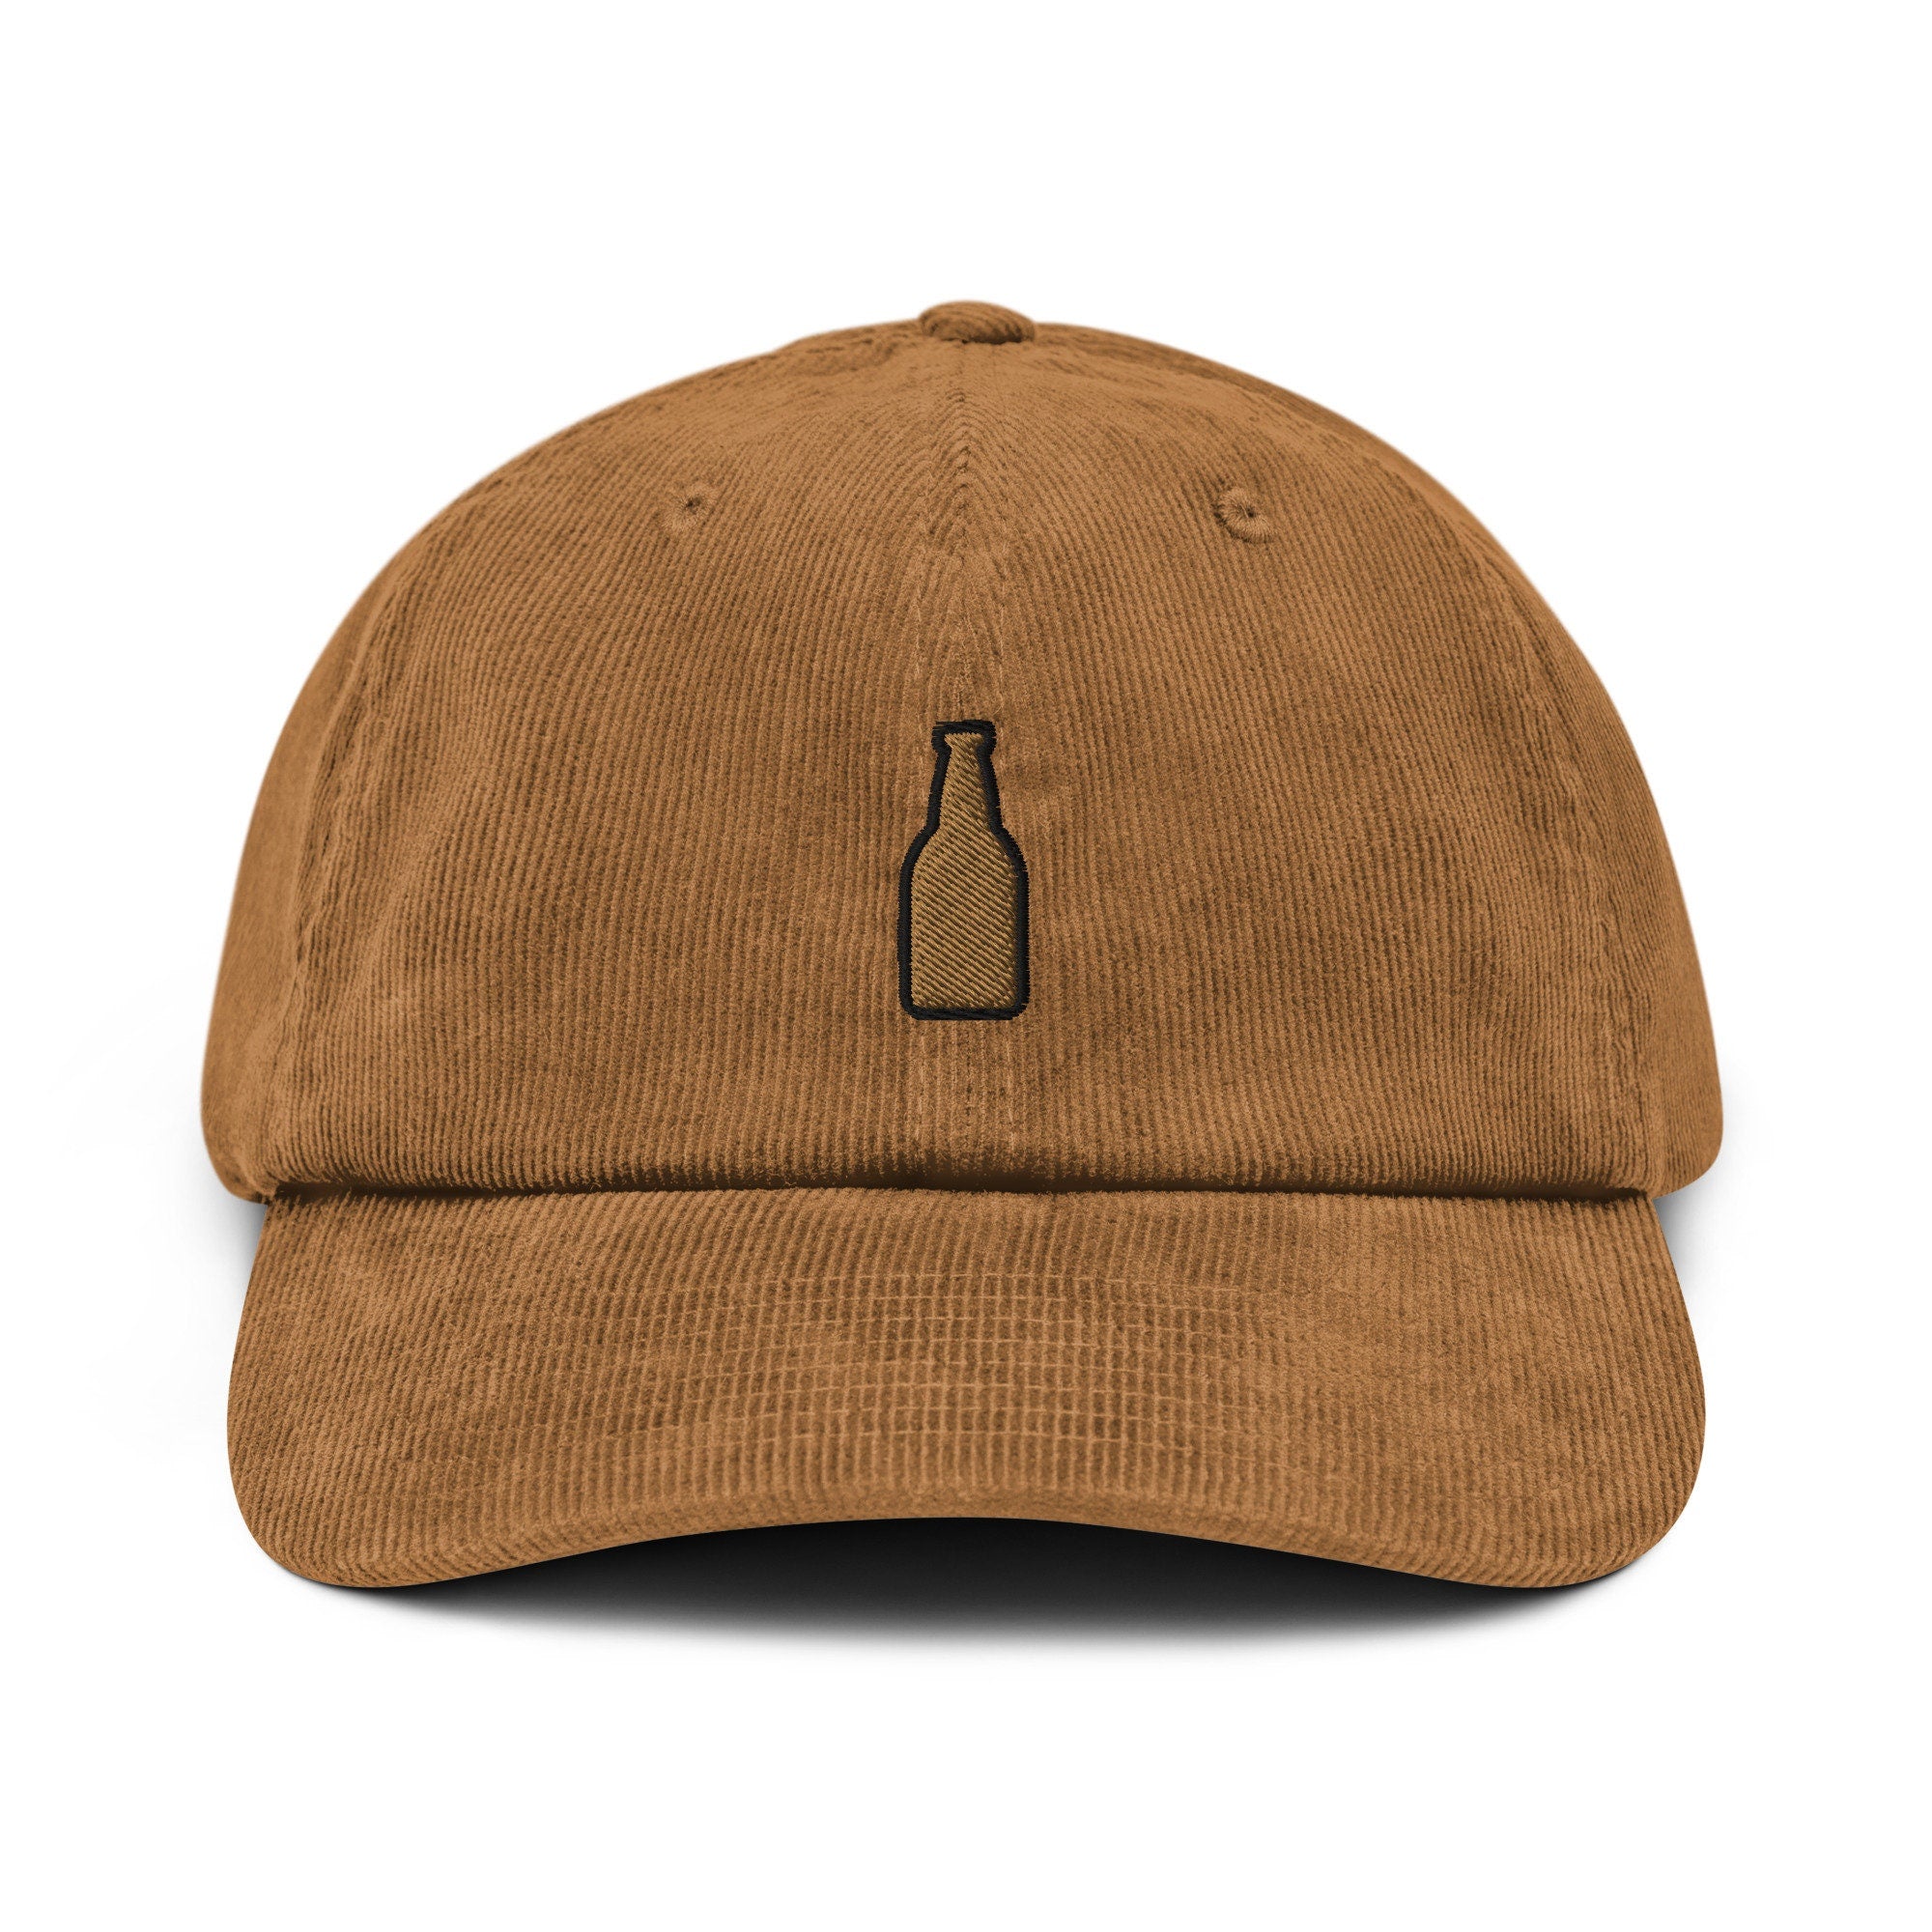 Beer Bottle Corduroy Hat, Handmade Embroidered Corduroy Dad Cap - Multiple Colors